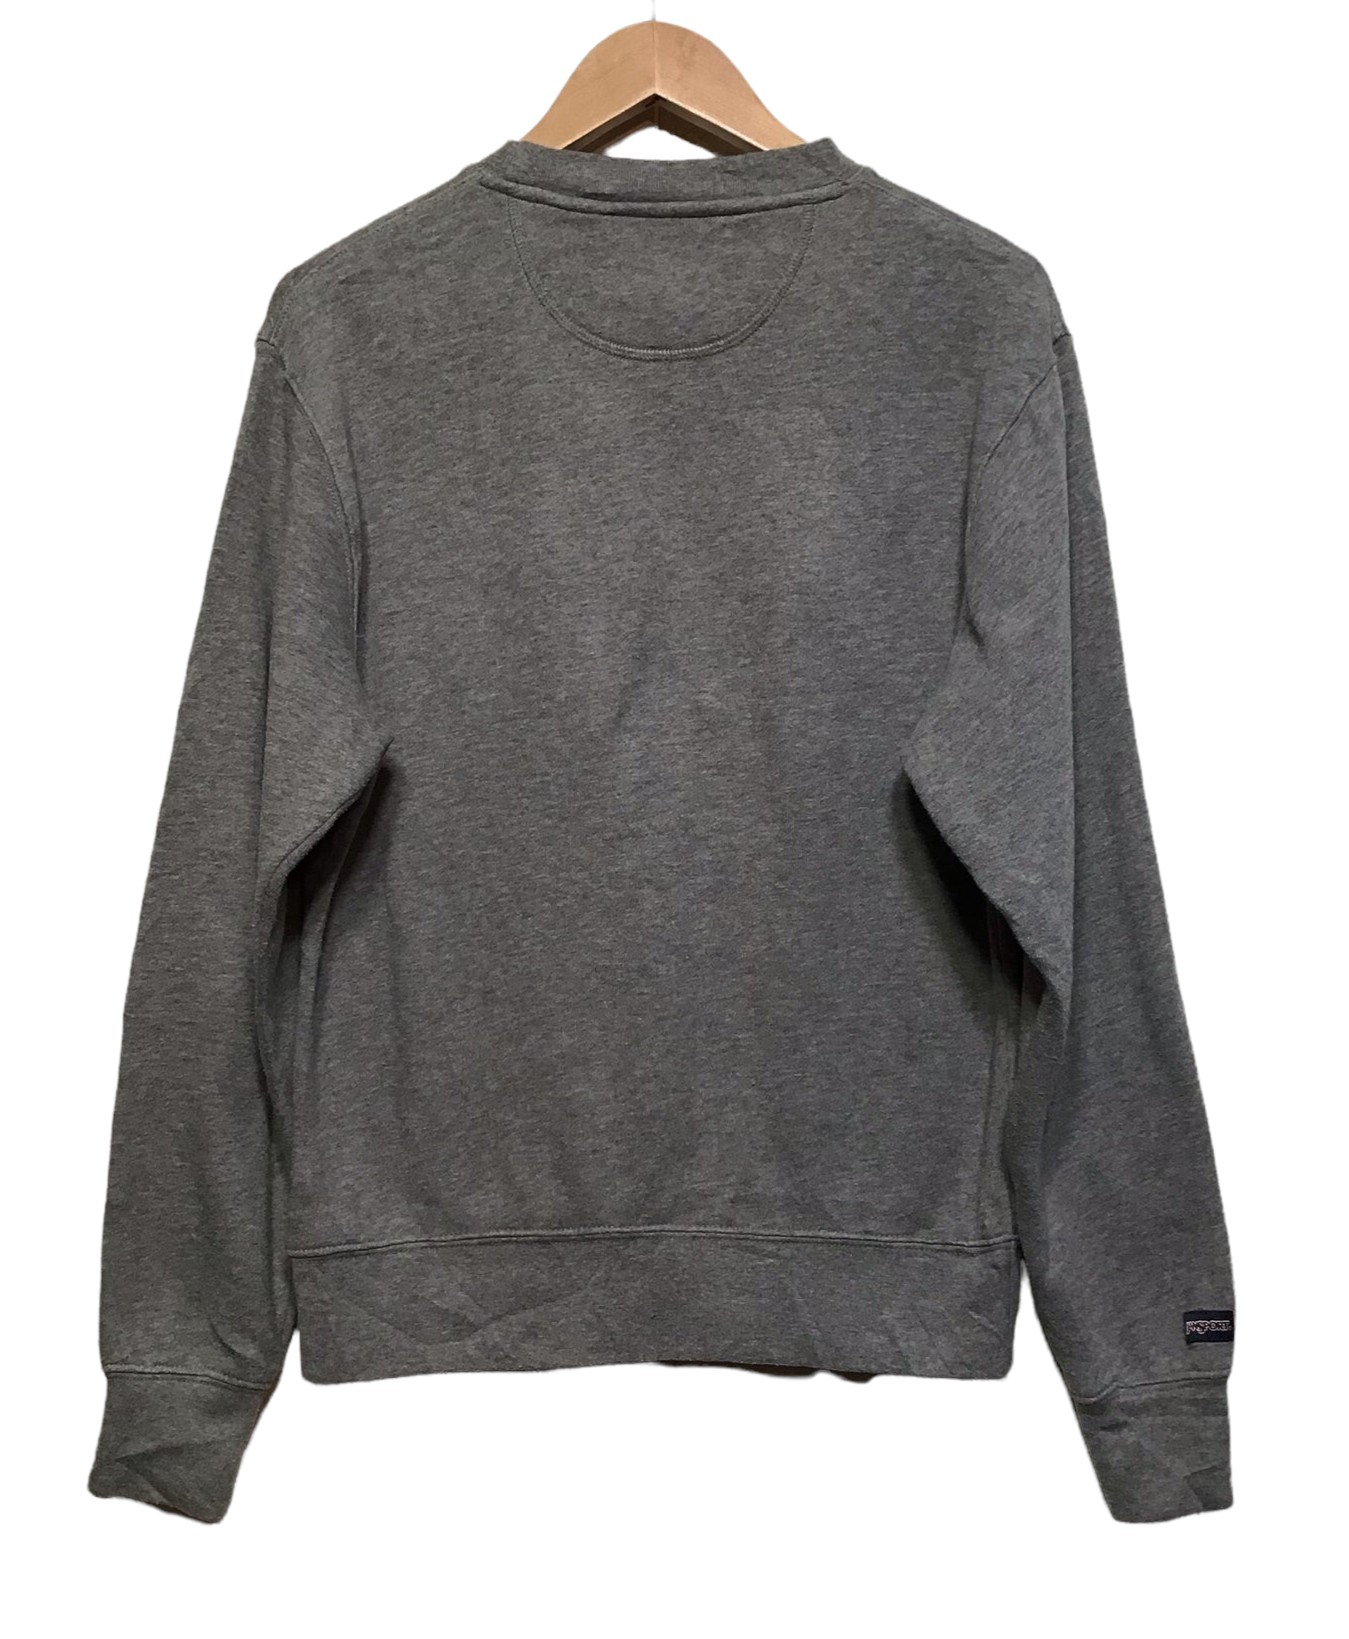 Huskers Nebraska Sweatshirt (Size S)